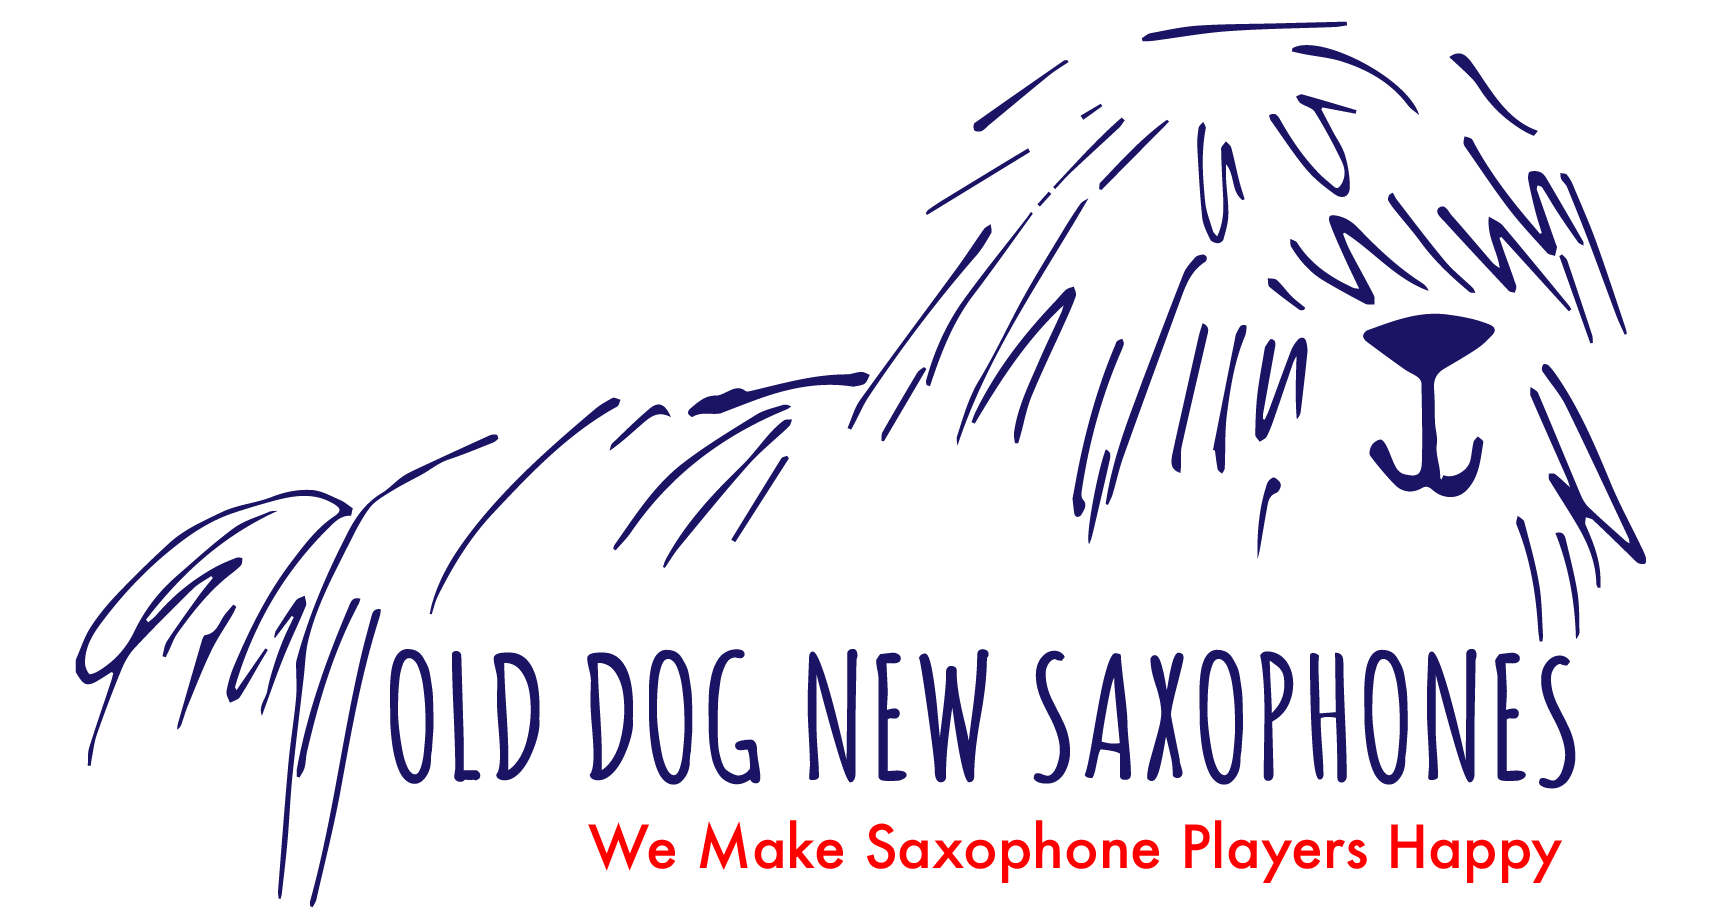 OLD DOG NEW SAXOPHONES